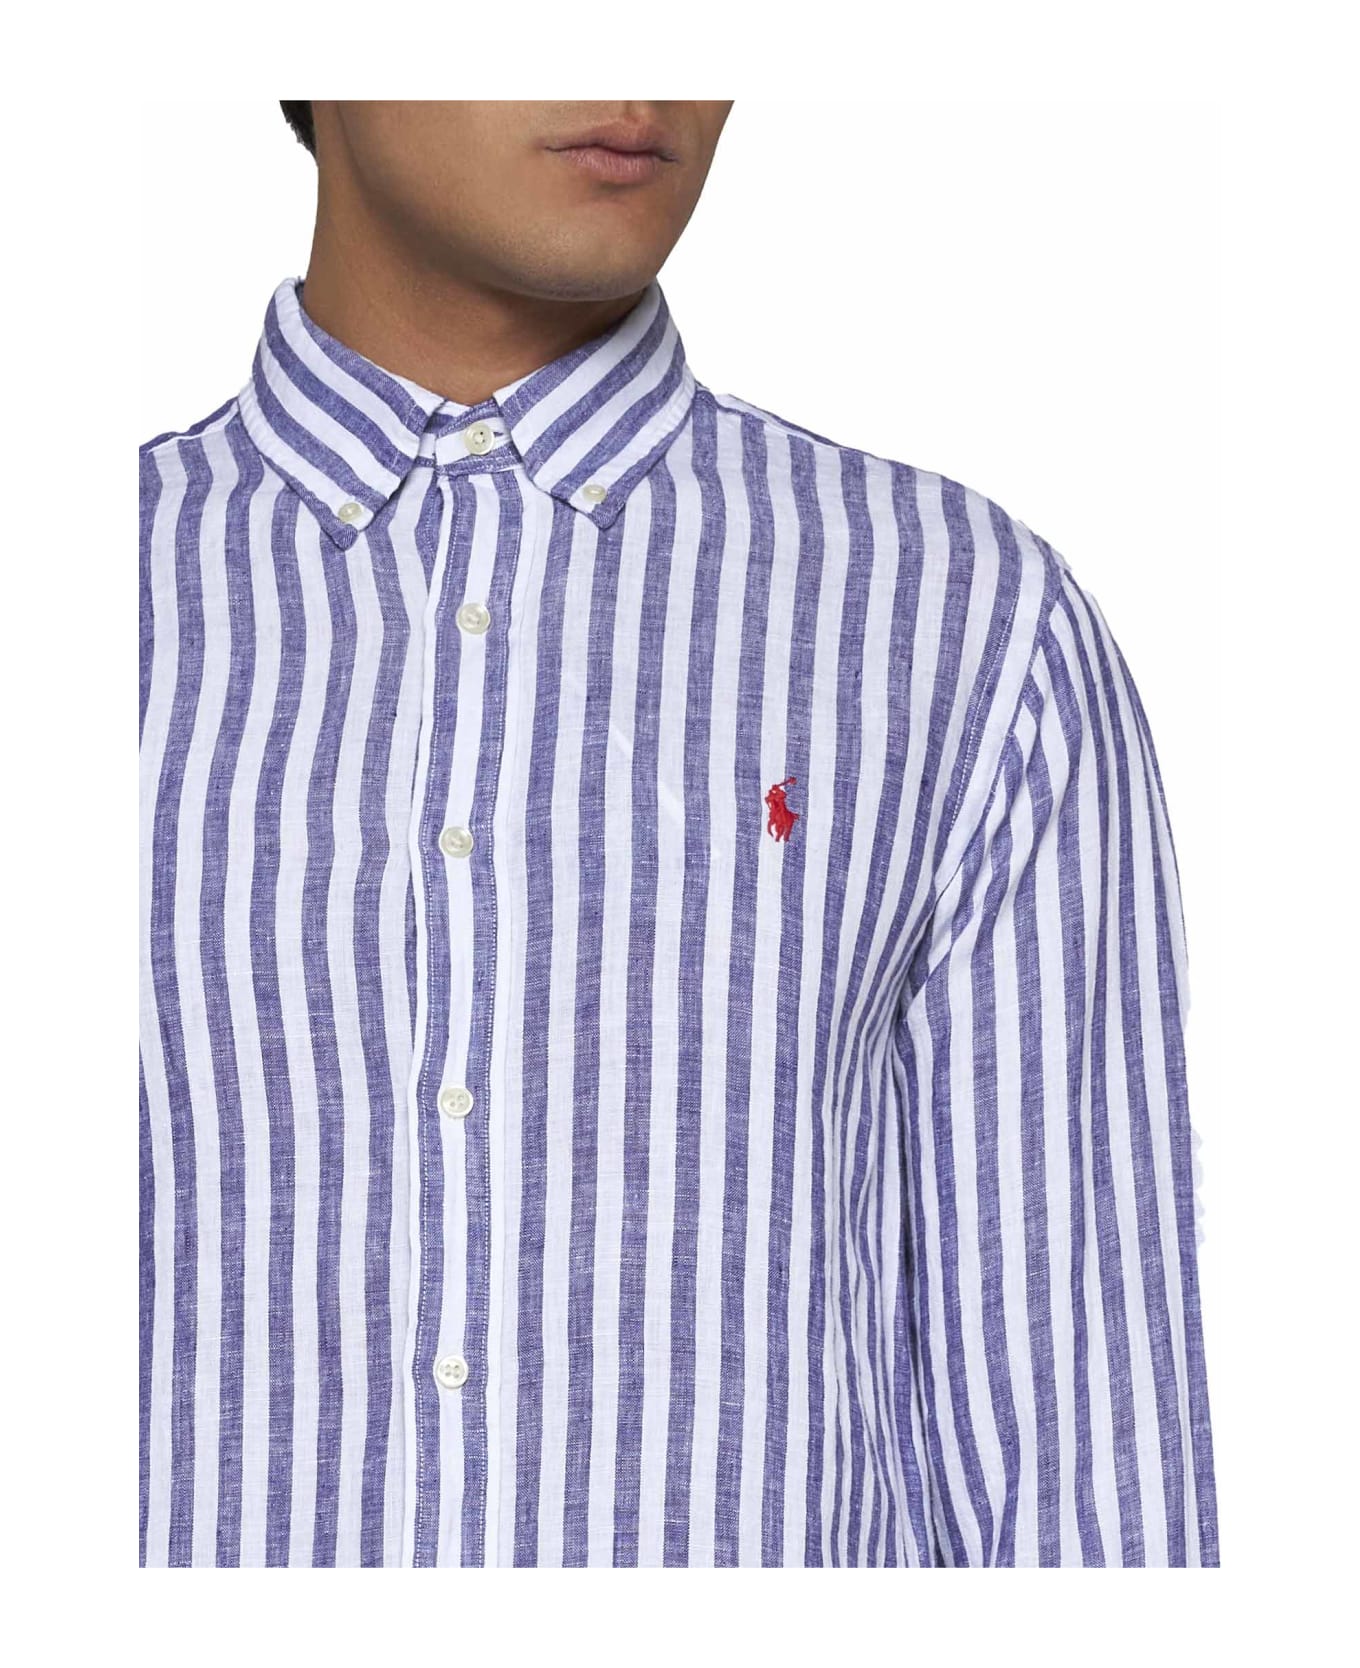 Polo Ralph Lauren Shirt - 5138a blue white